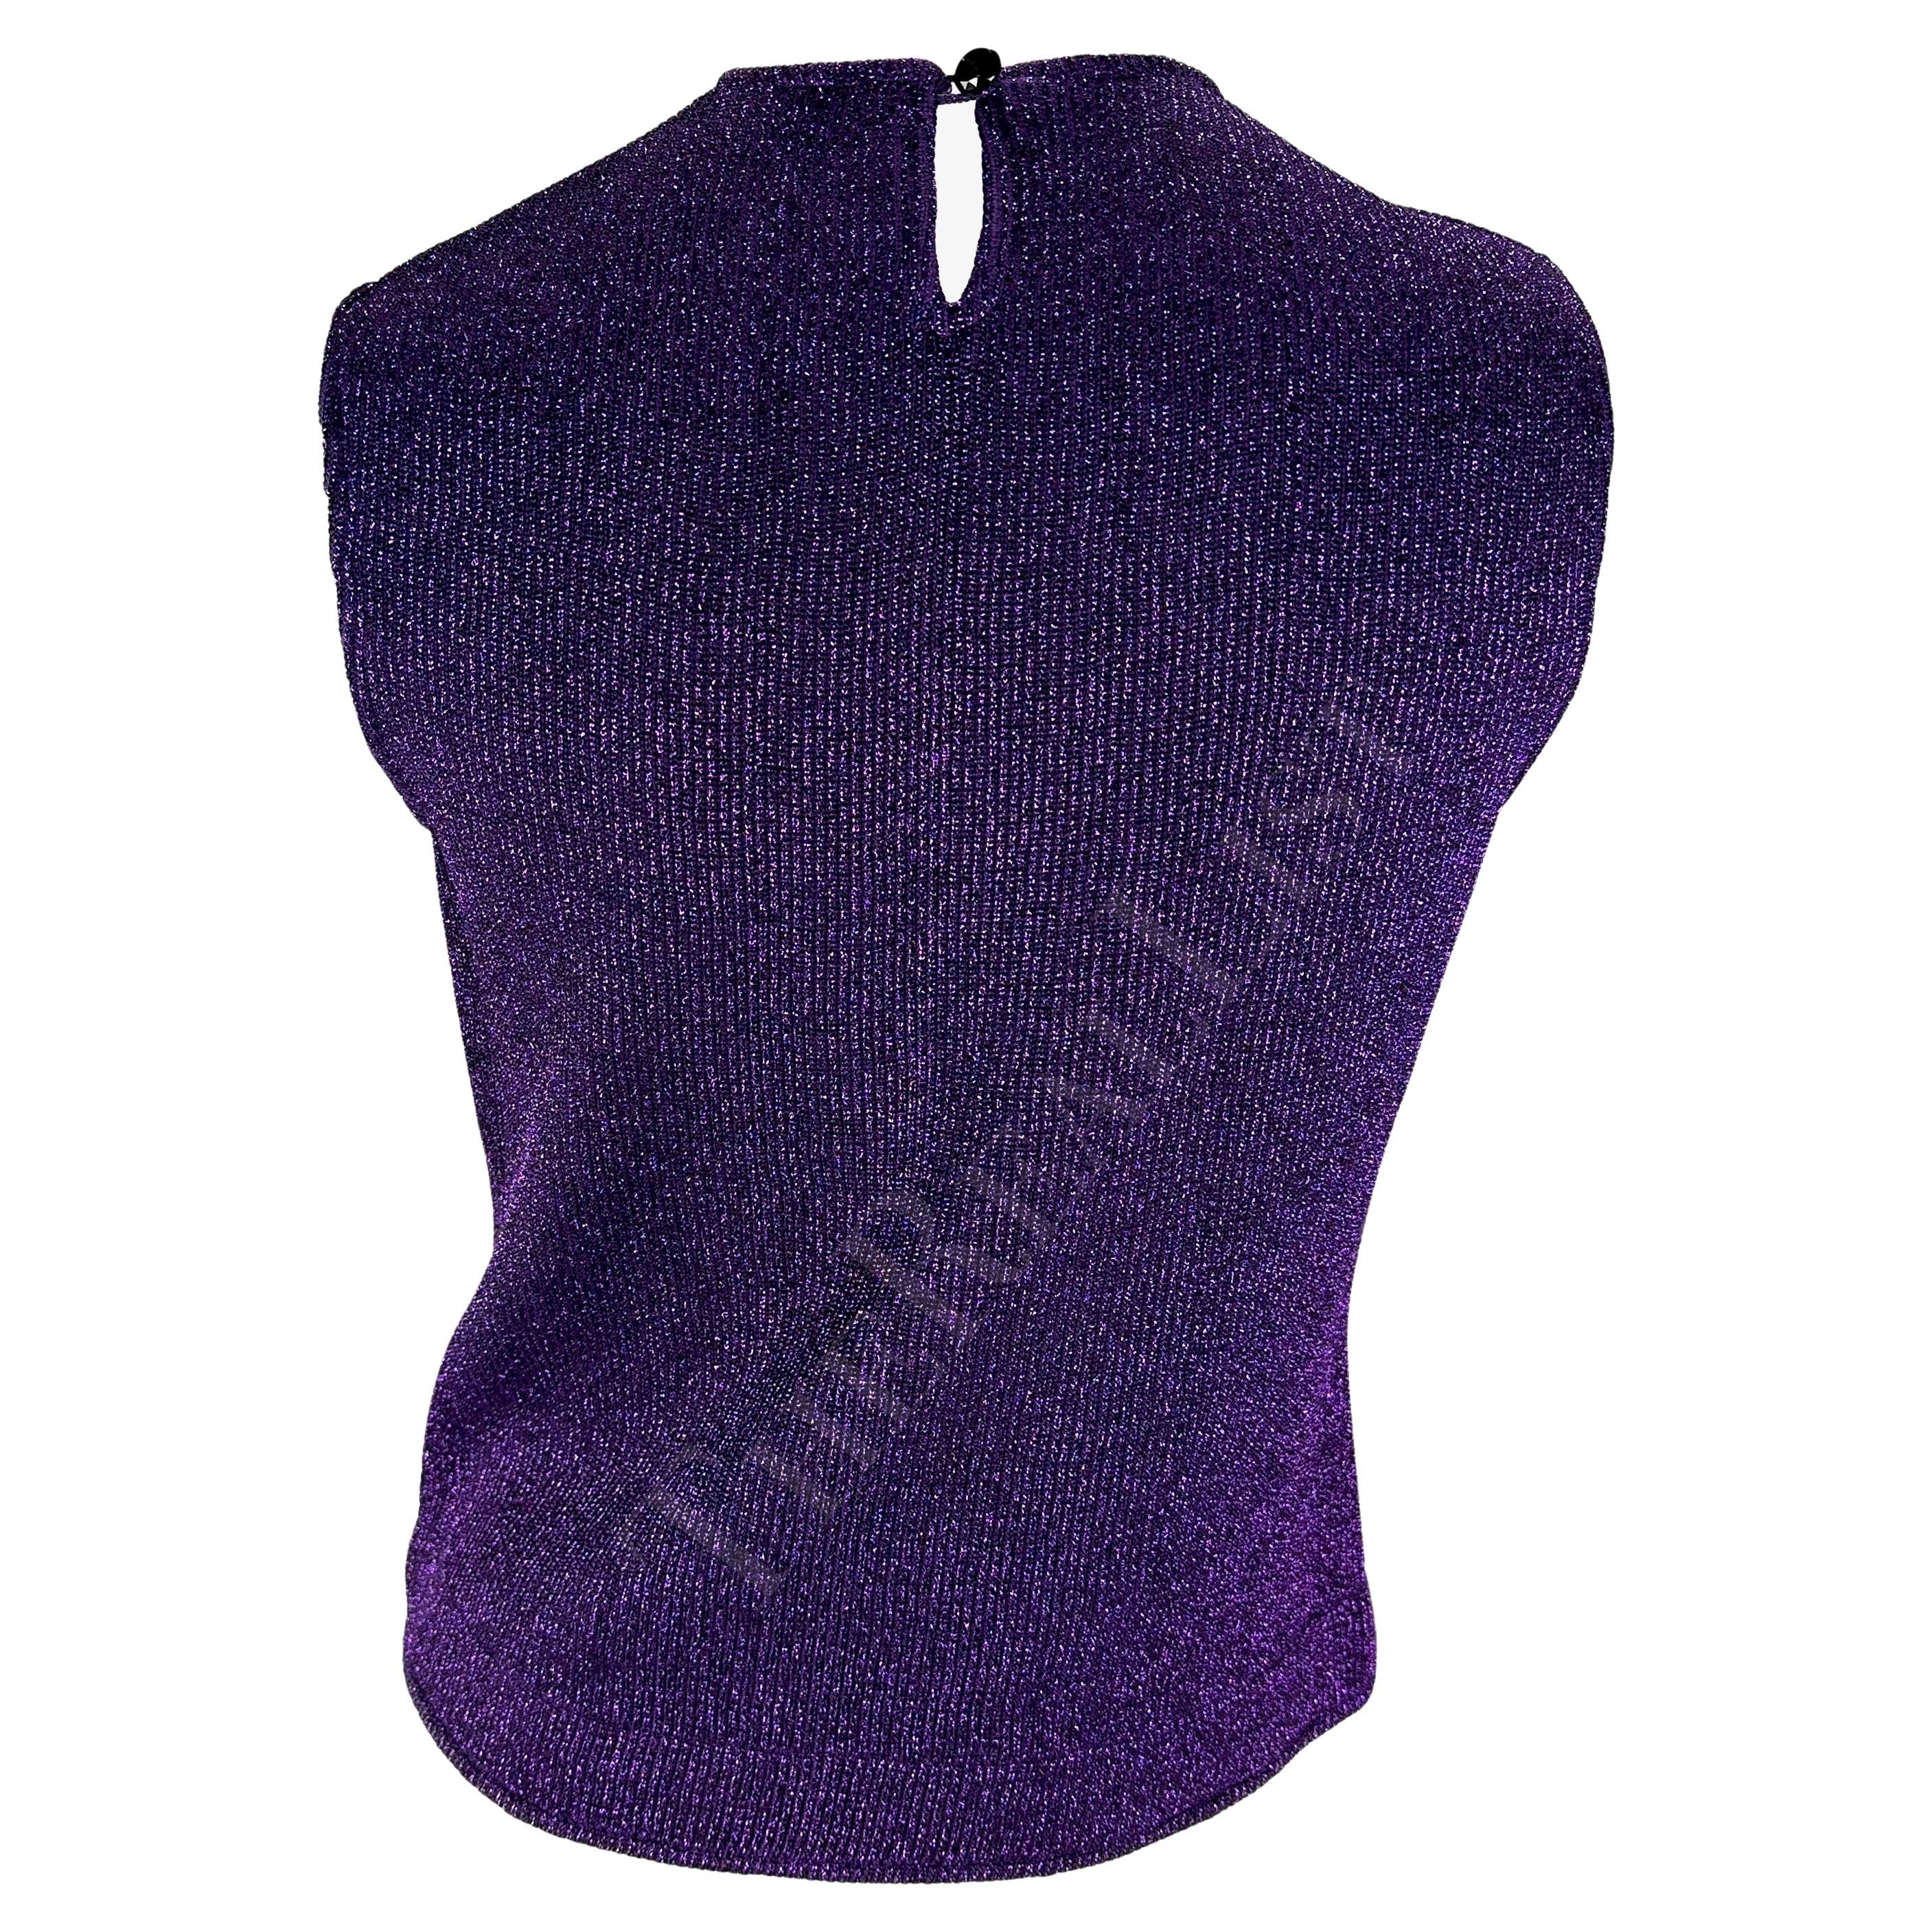 F/W 1996 Salvatore Ferragamo Purple Metallic Knit Sleeveless Top For Sale 2